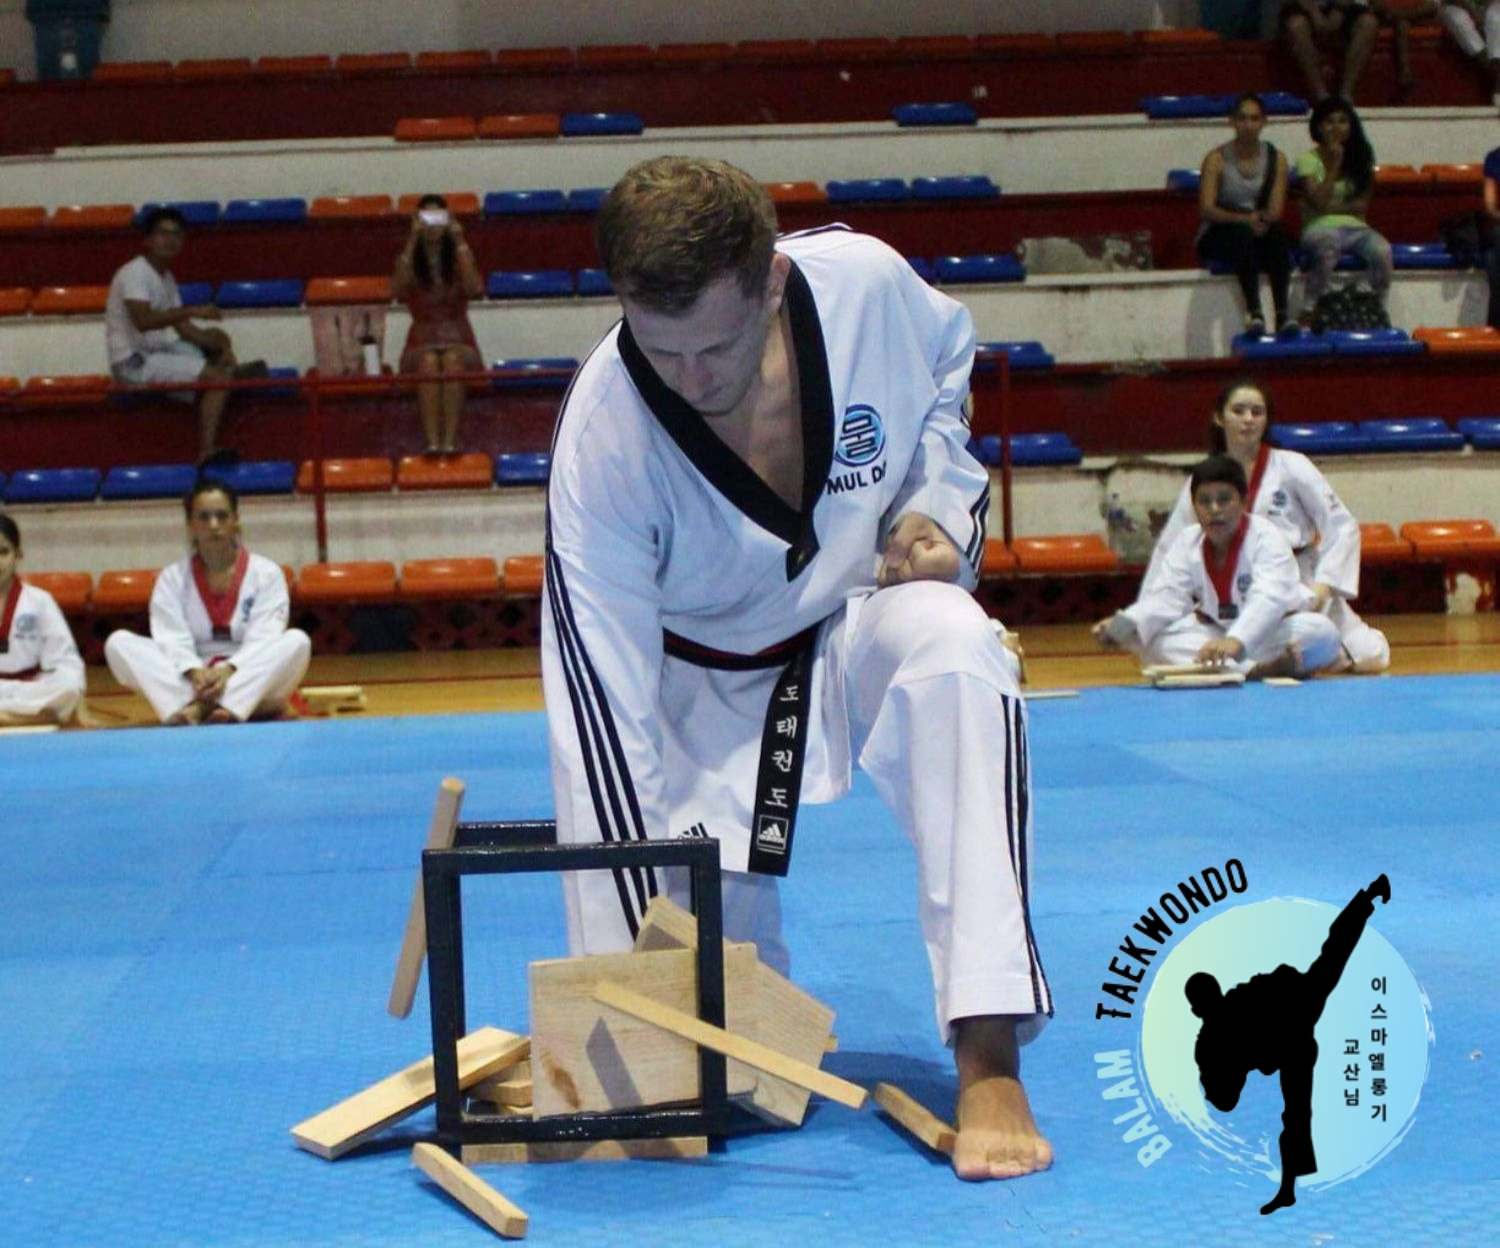 https://jureresportscenter.com.br/wp-content/uploads/2021/10/balam-taekwondo-jurere-sports-center-florianopolis-com-logo.jpg